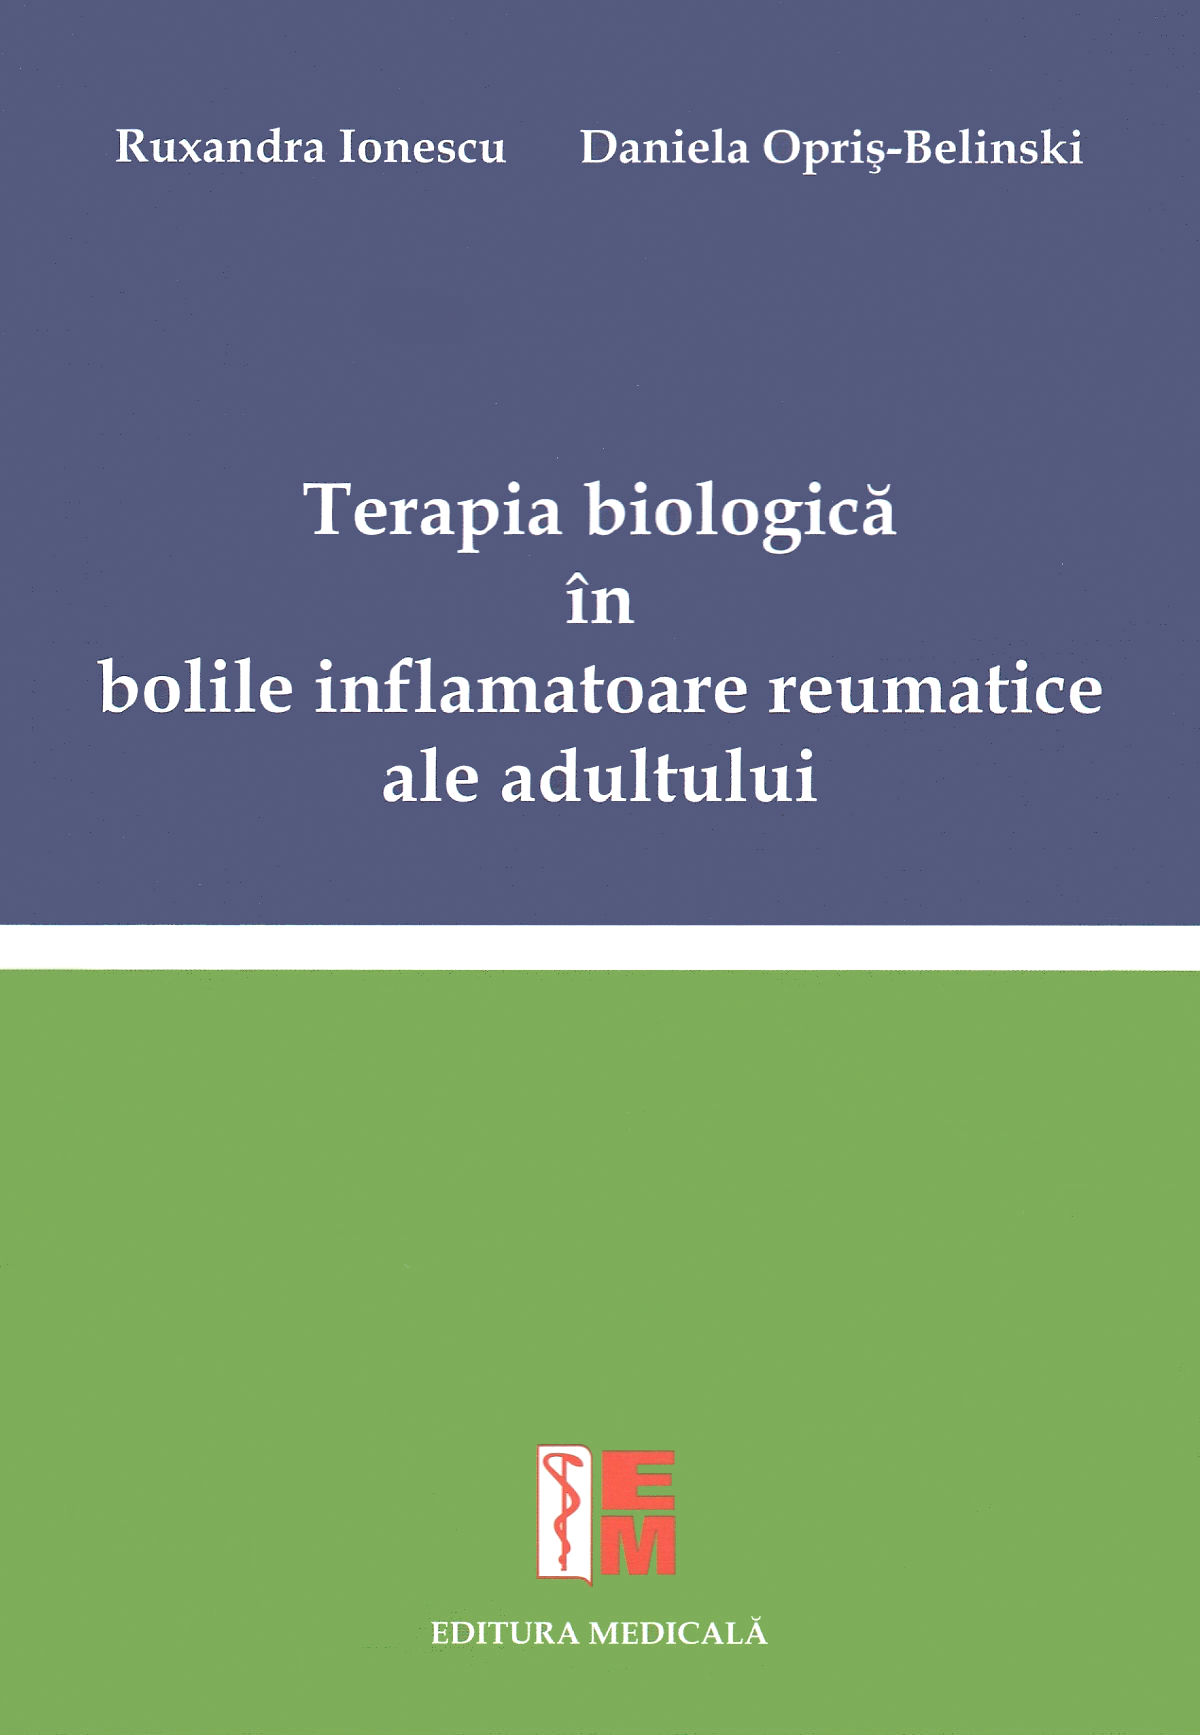 Terapia biologica in bolile inflamatoare reumatice ale adultului - Ruxandra Ionescu, Daniela Opris-Belinski